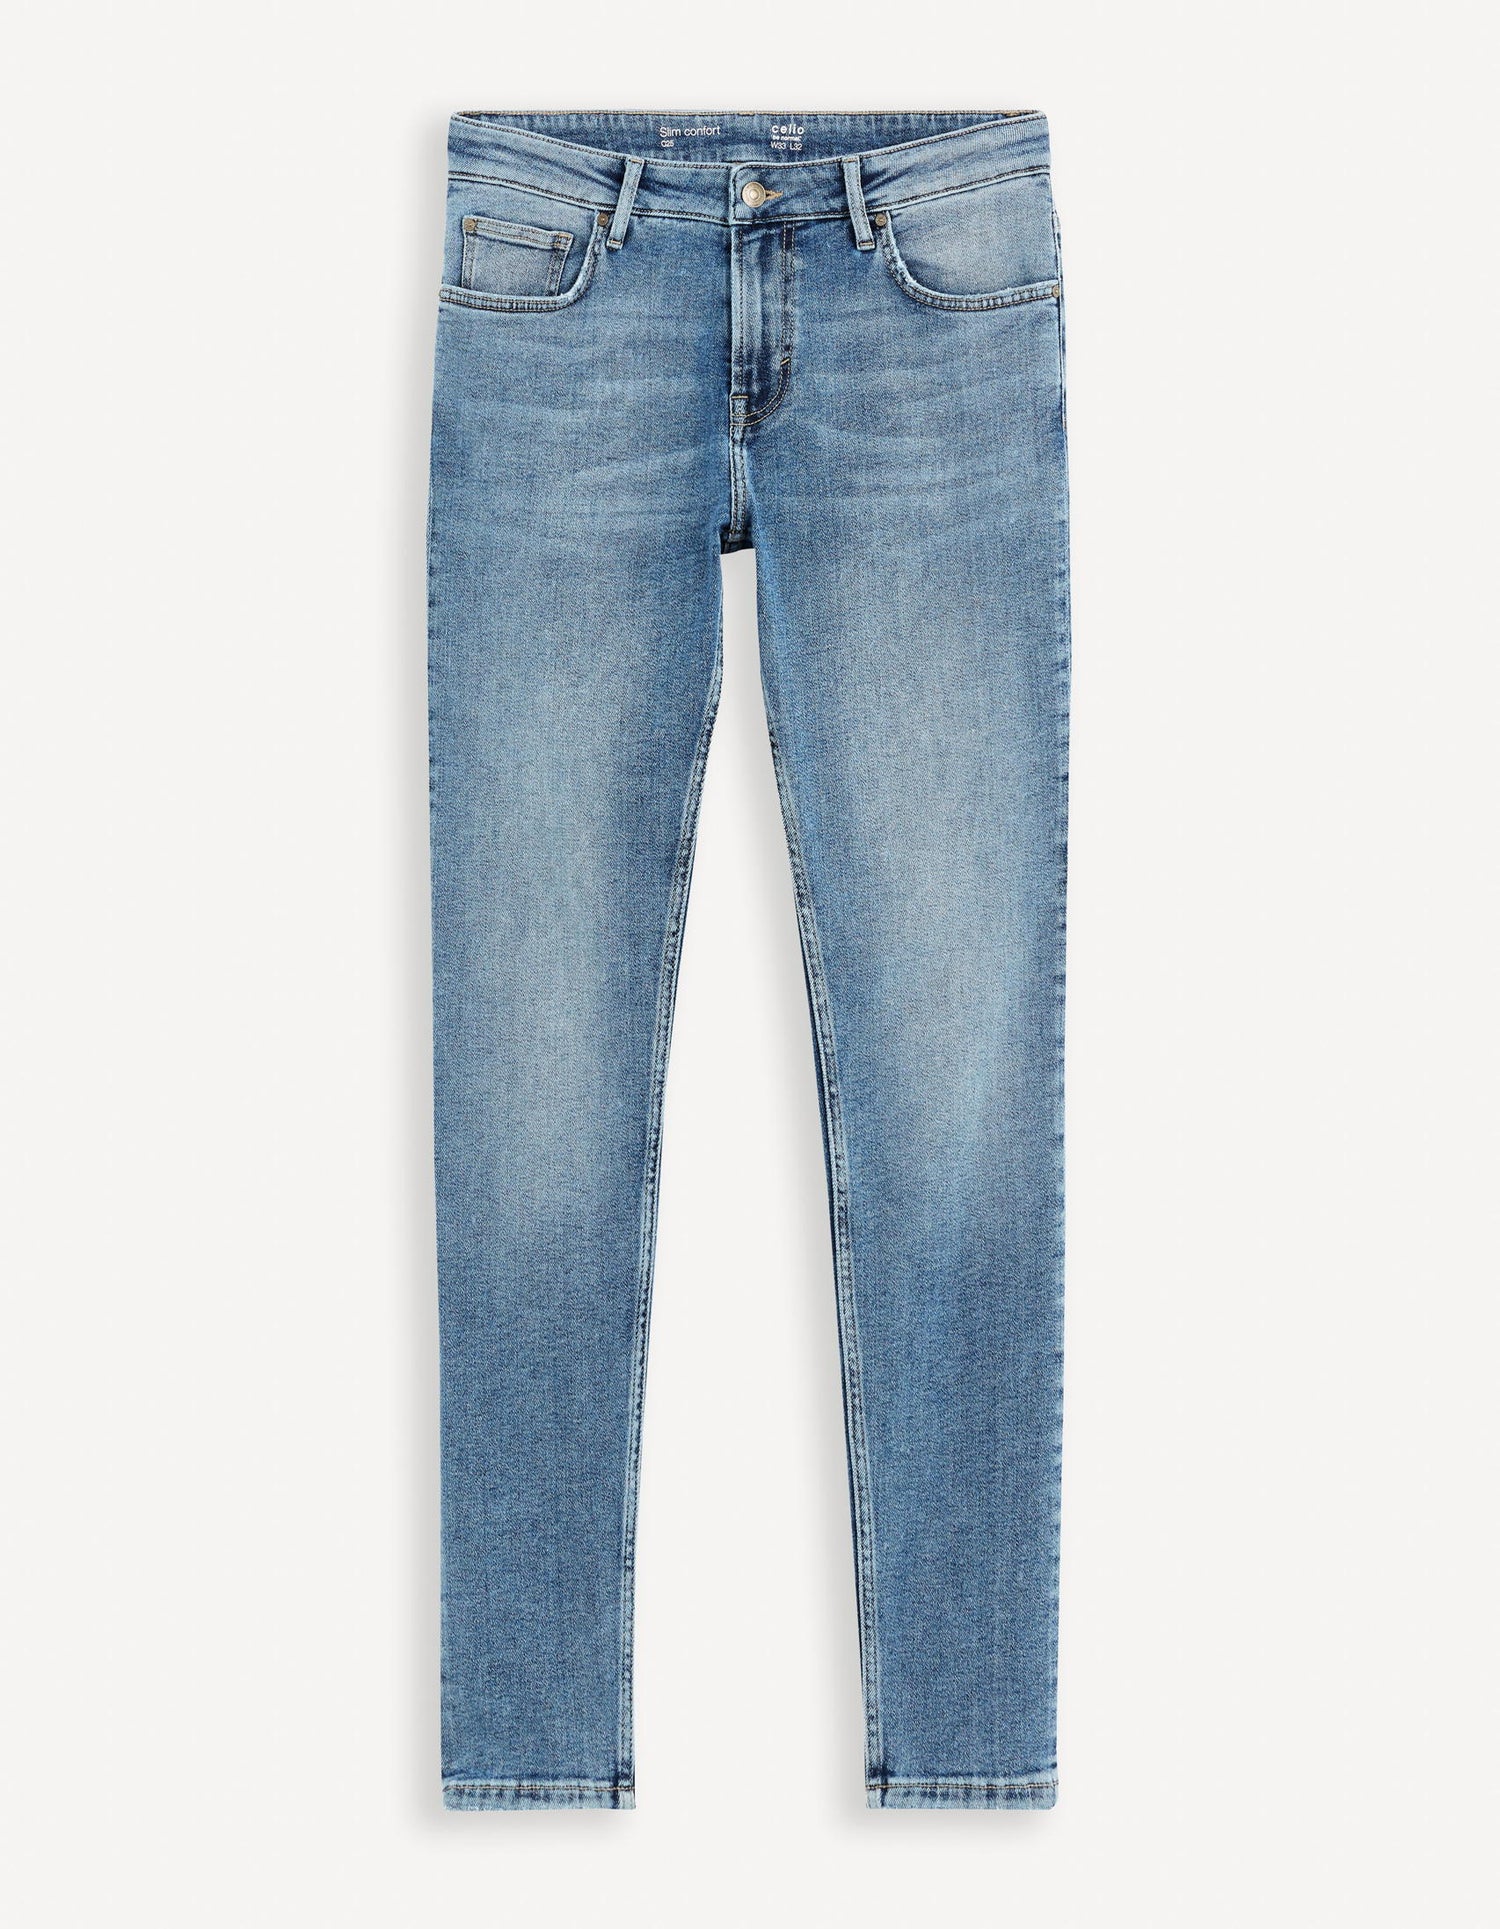 C25 Slim Stretch Jeans 3 Lengths - Blue_DOFINE25_DOUBLE STONE_02